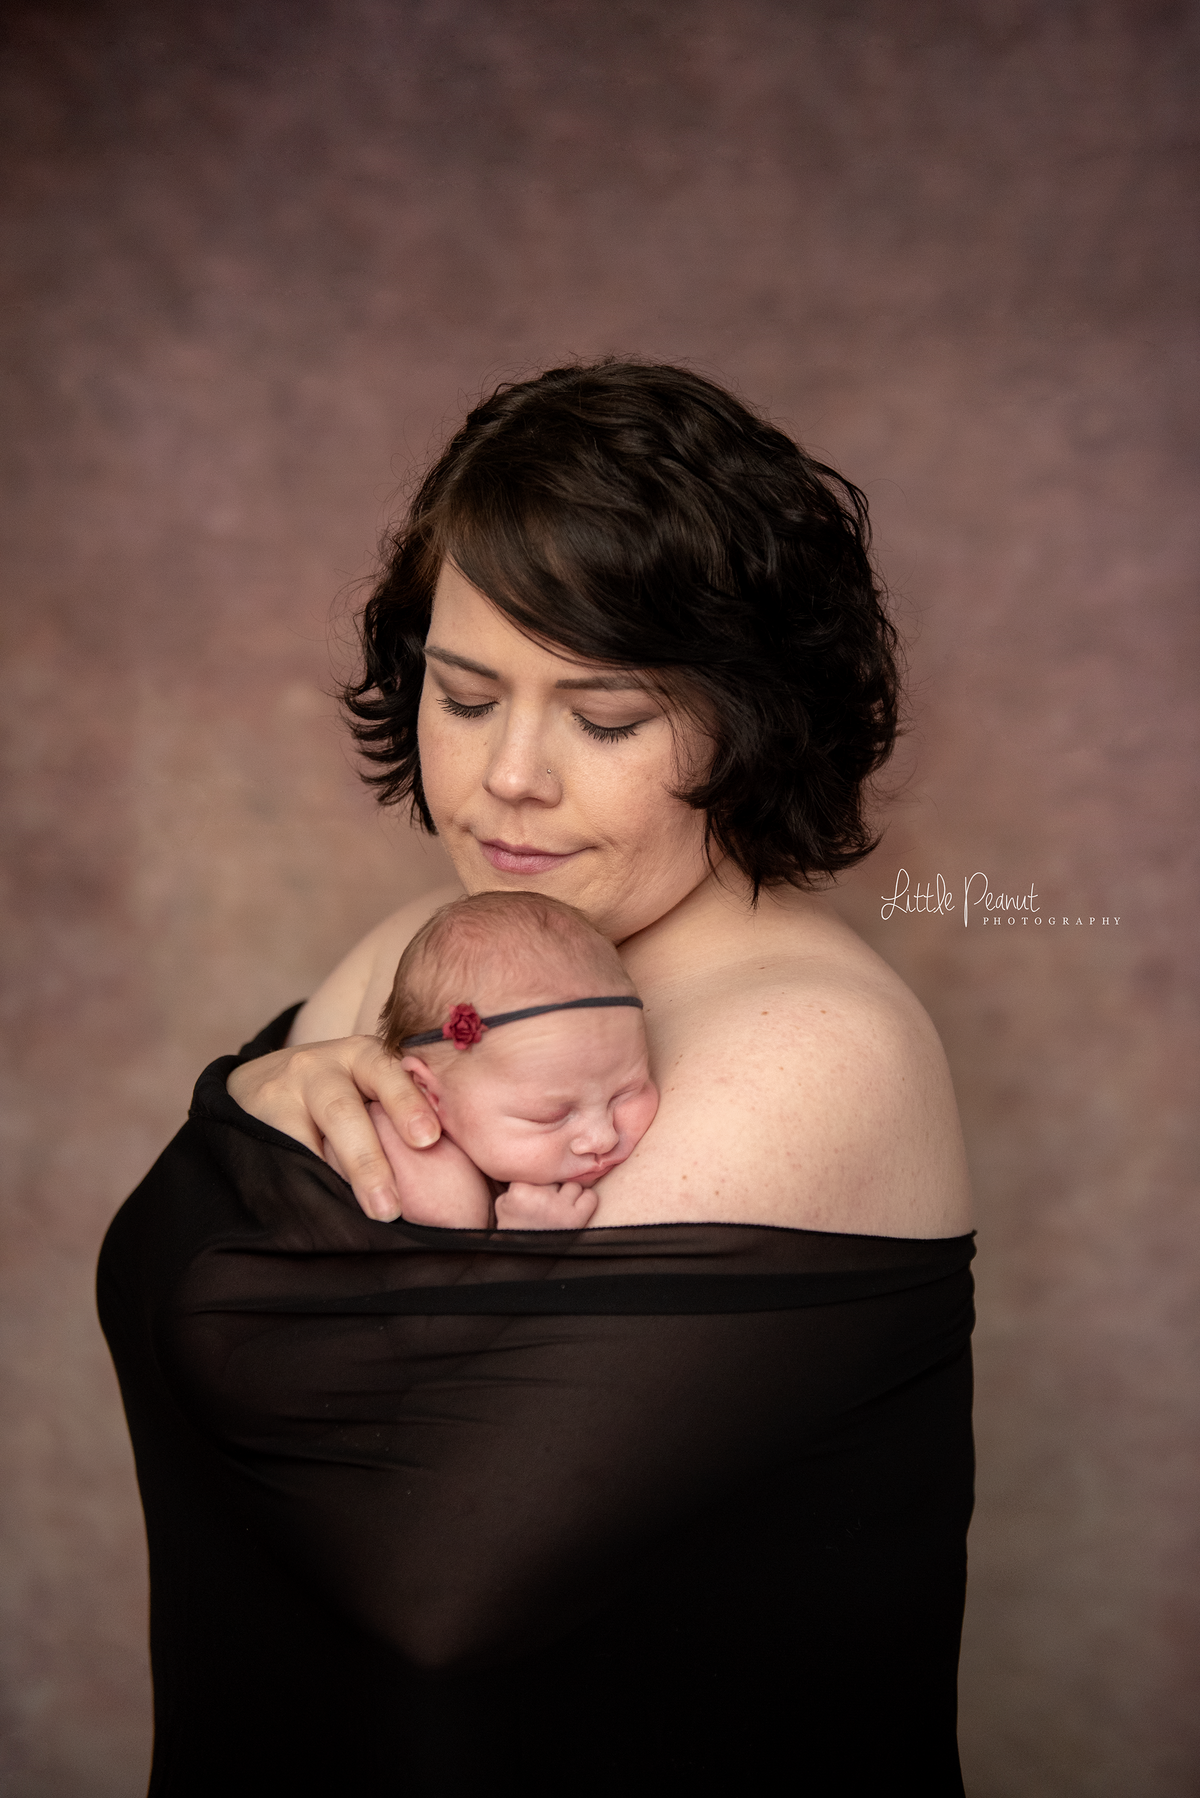 w2018-LittlePeanutPhotography-Newborn-4202